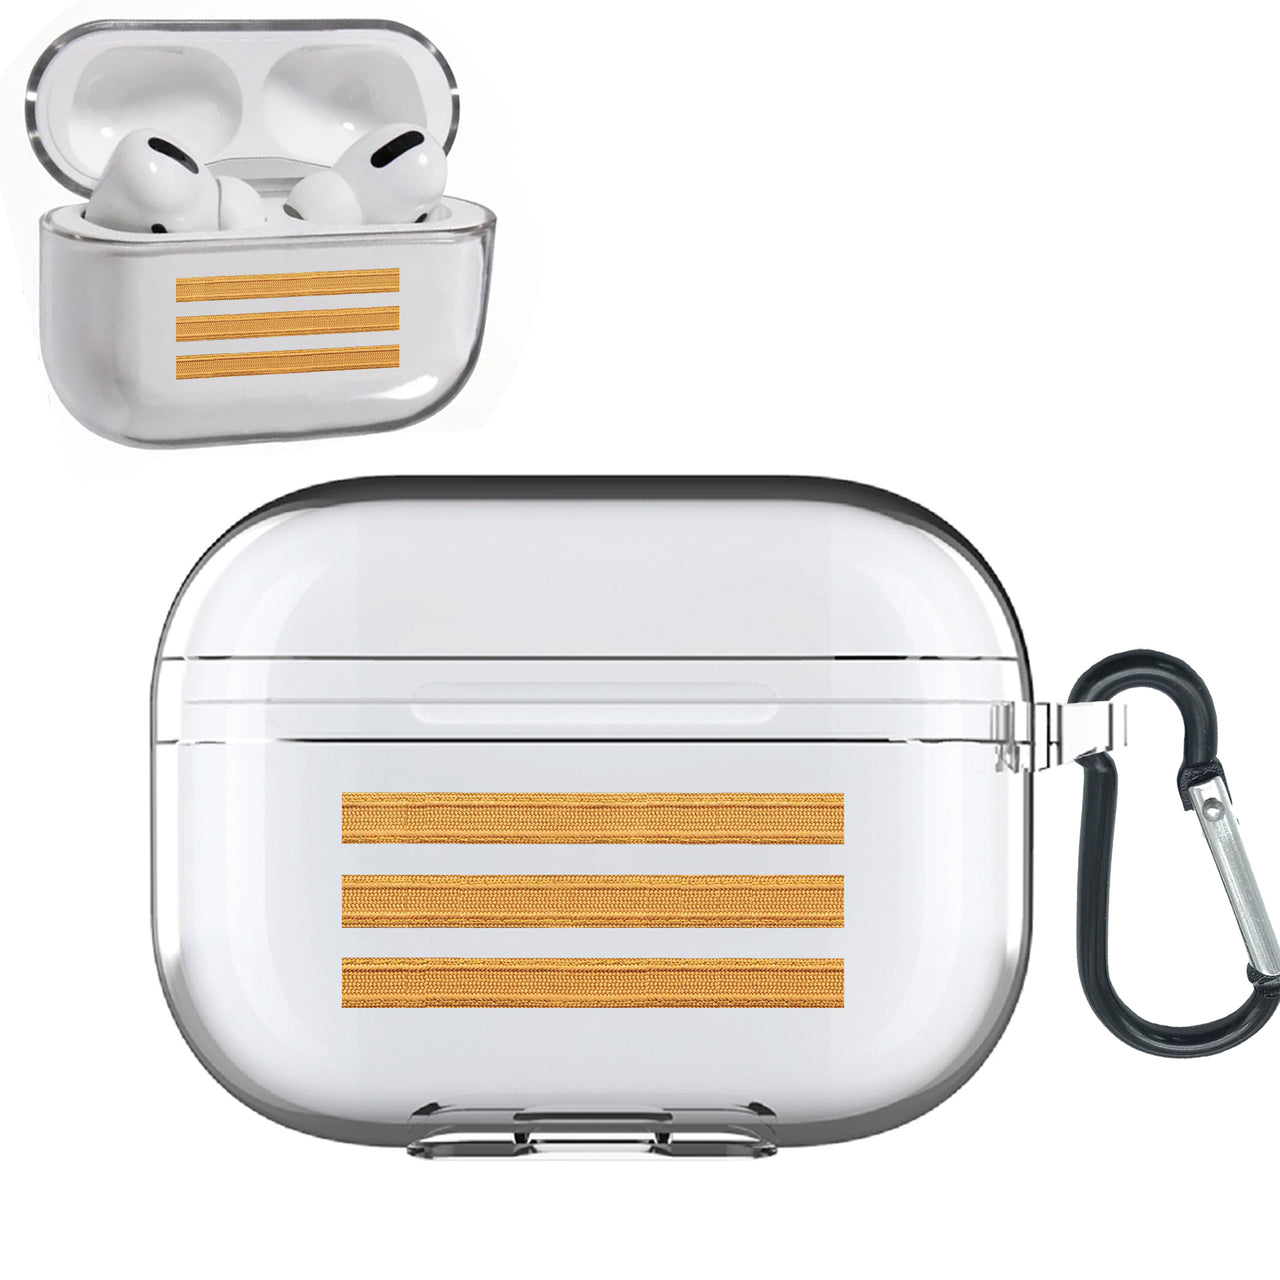 Golden Pilot Epaulettes (4,3,2 Lines) Designed Transparent Earphone AirPods "Pro" Cases